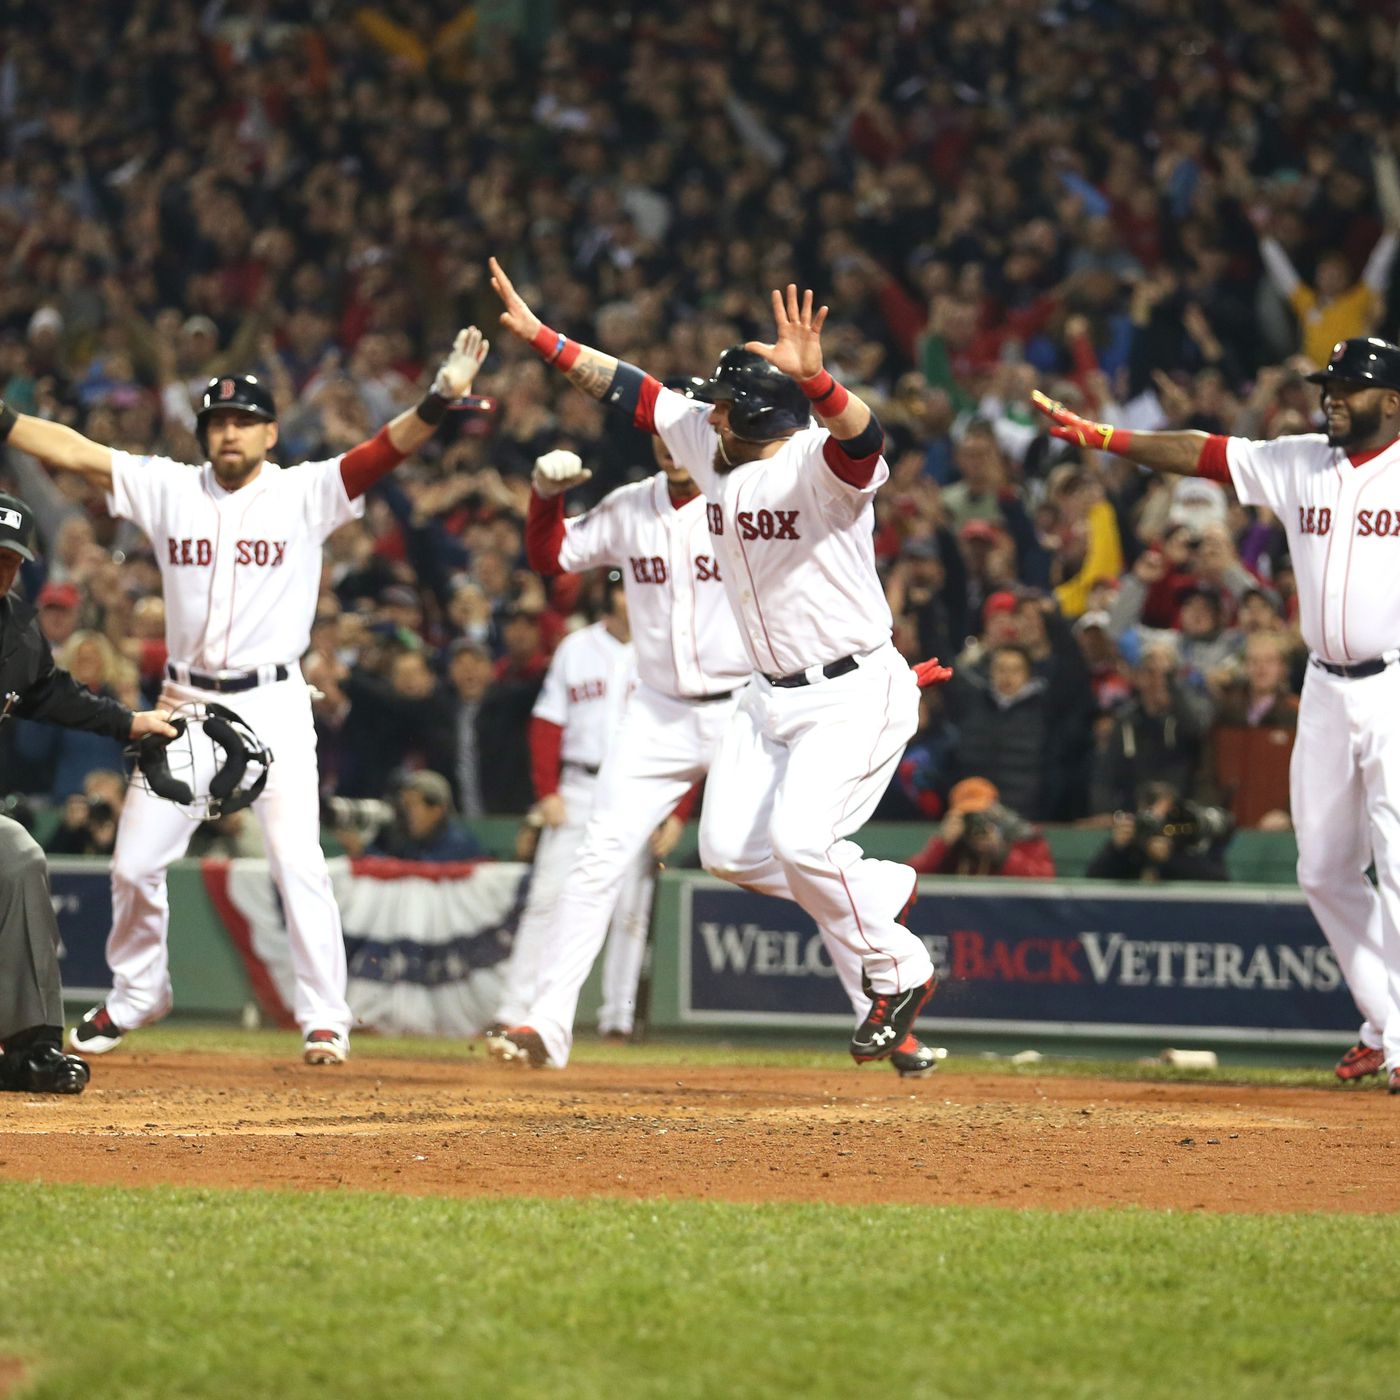 2013 World Series Champions Boston Red Sox